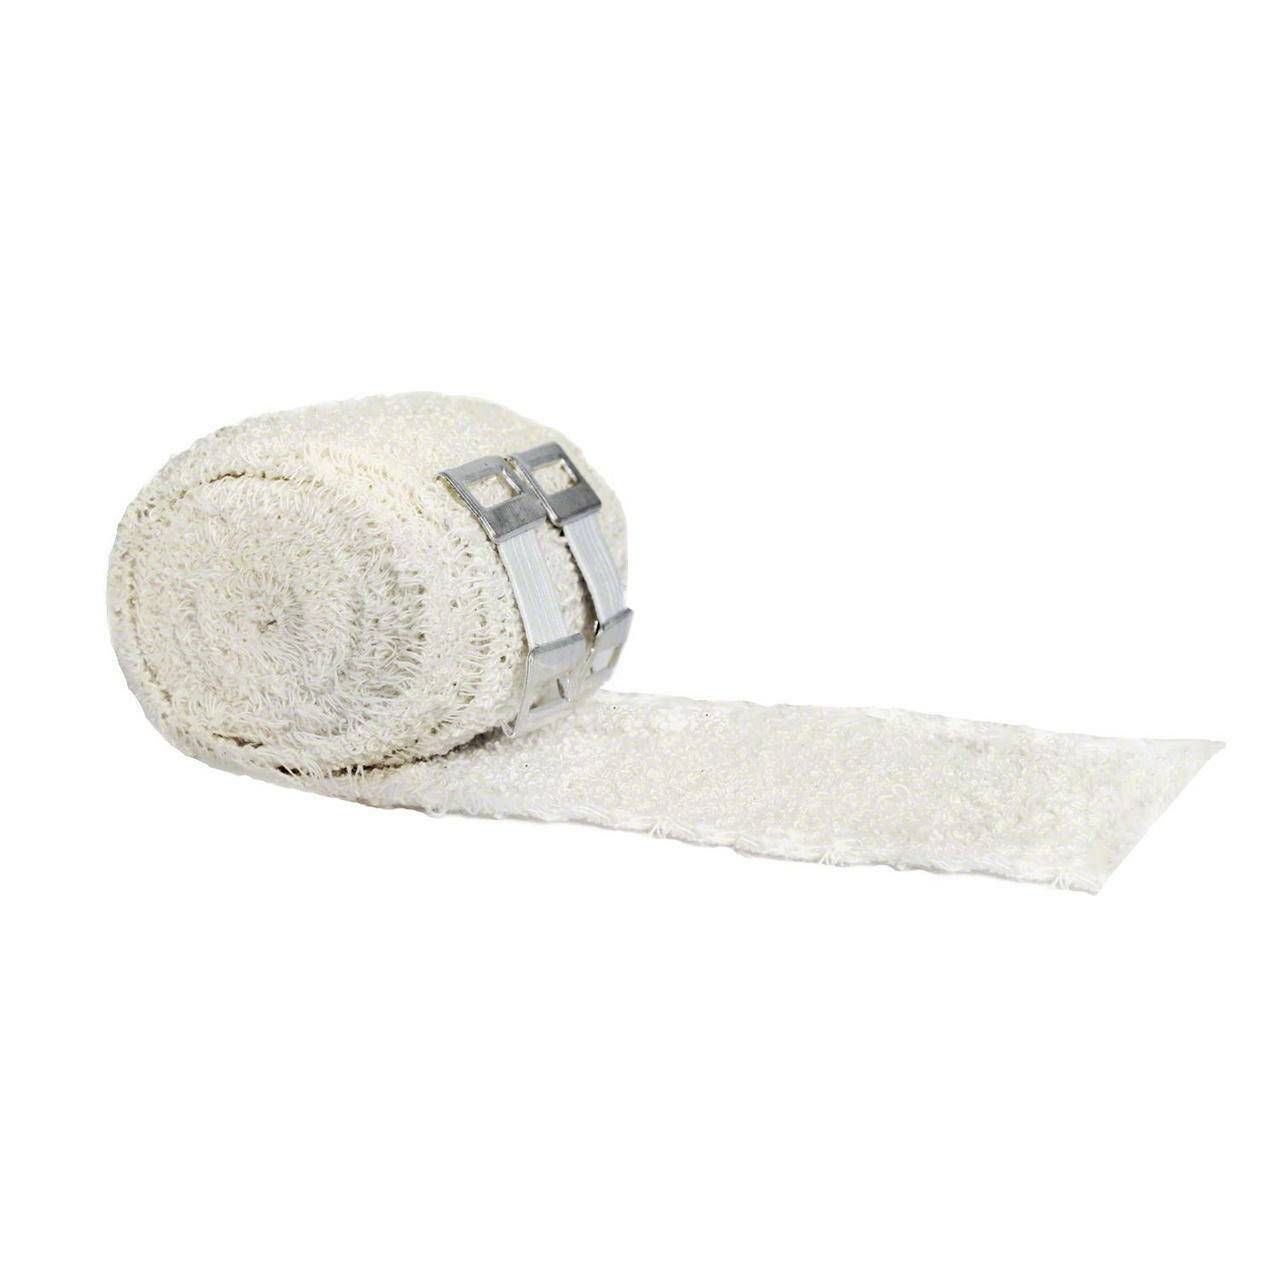 Steroplast Crepe Bandage - 5cm x 4m - UKMEDI